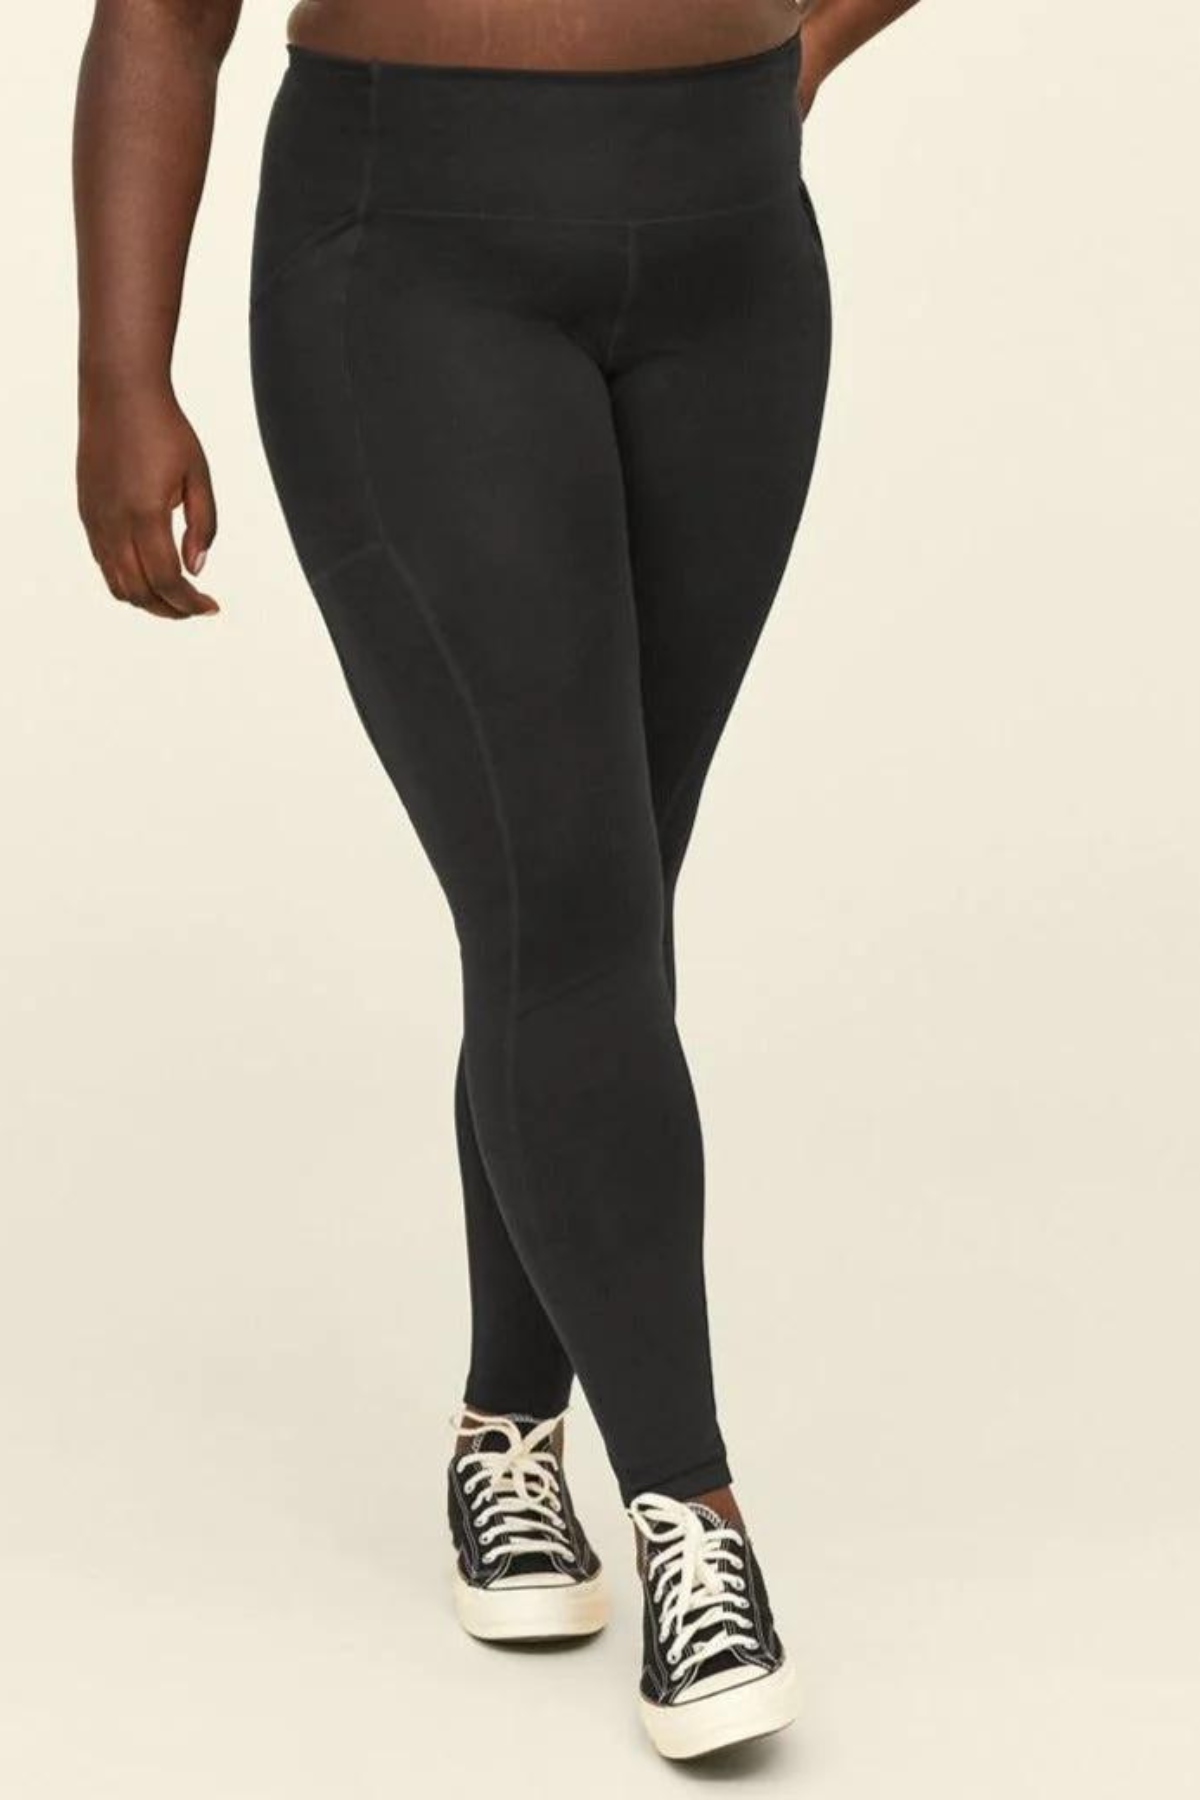 DuoKnit Leggings in Black Lemon Spritz  High leggings, Clothing  essentials, Leggings